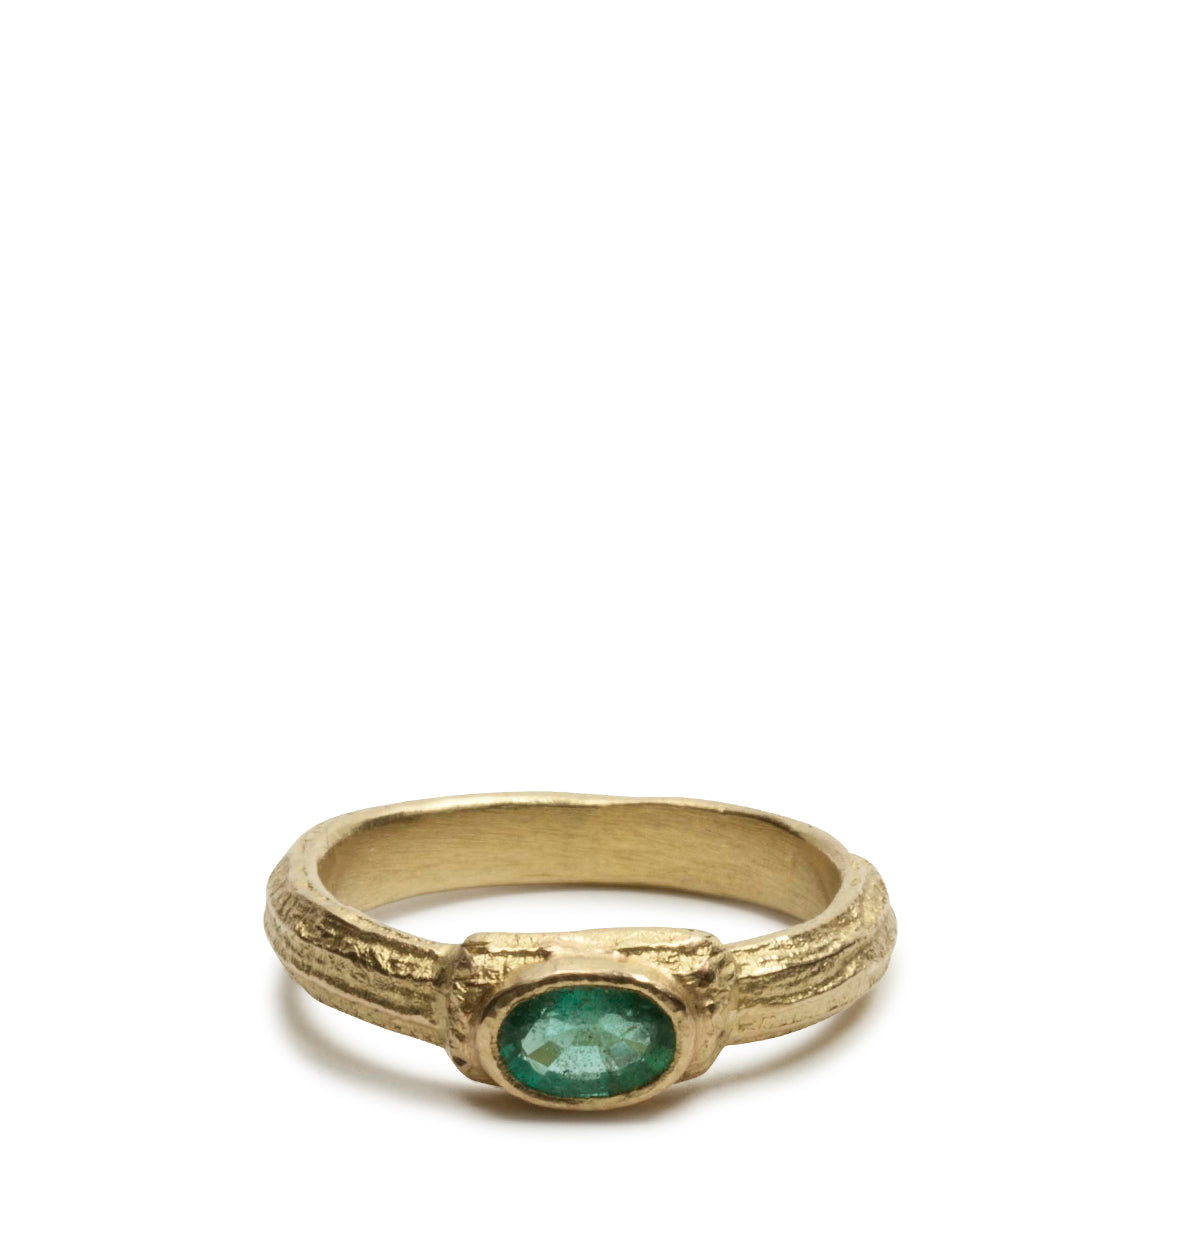 Zierlicher 750 Goldring mit ovalem grünem Smaragd